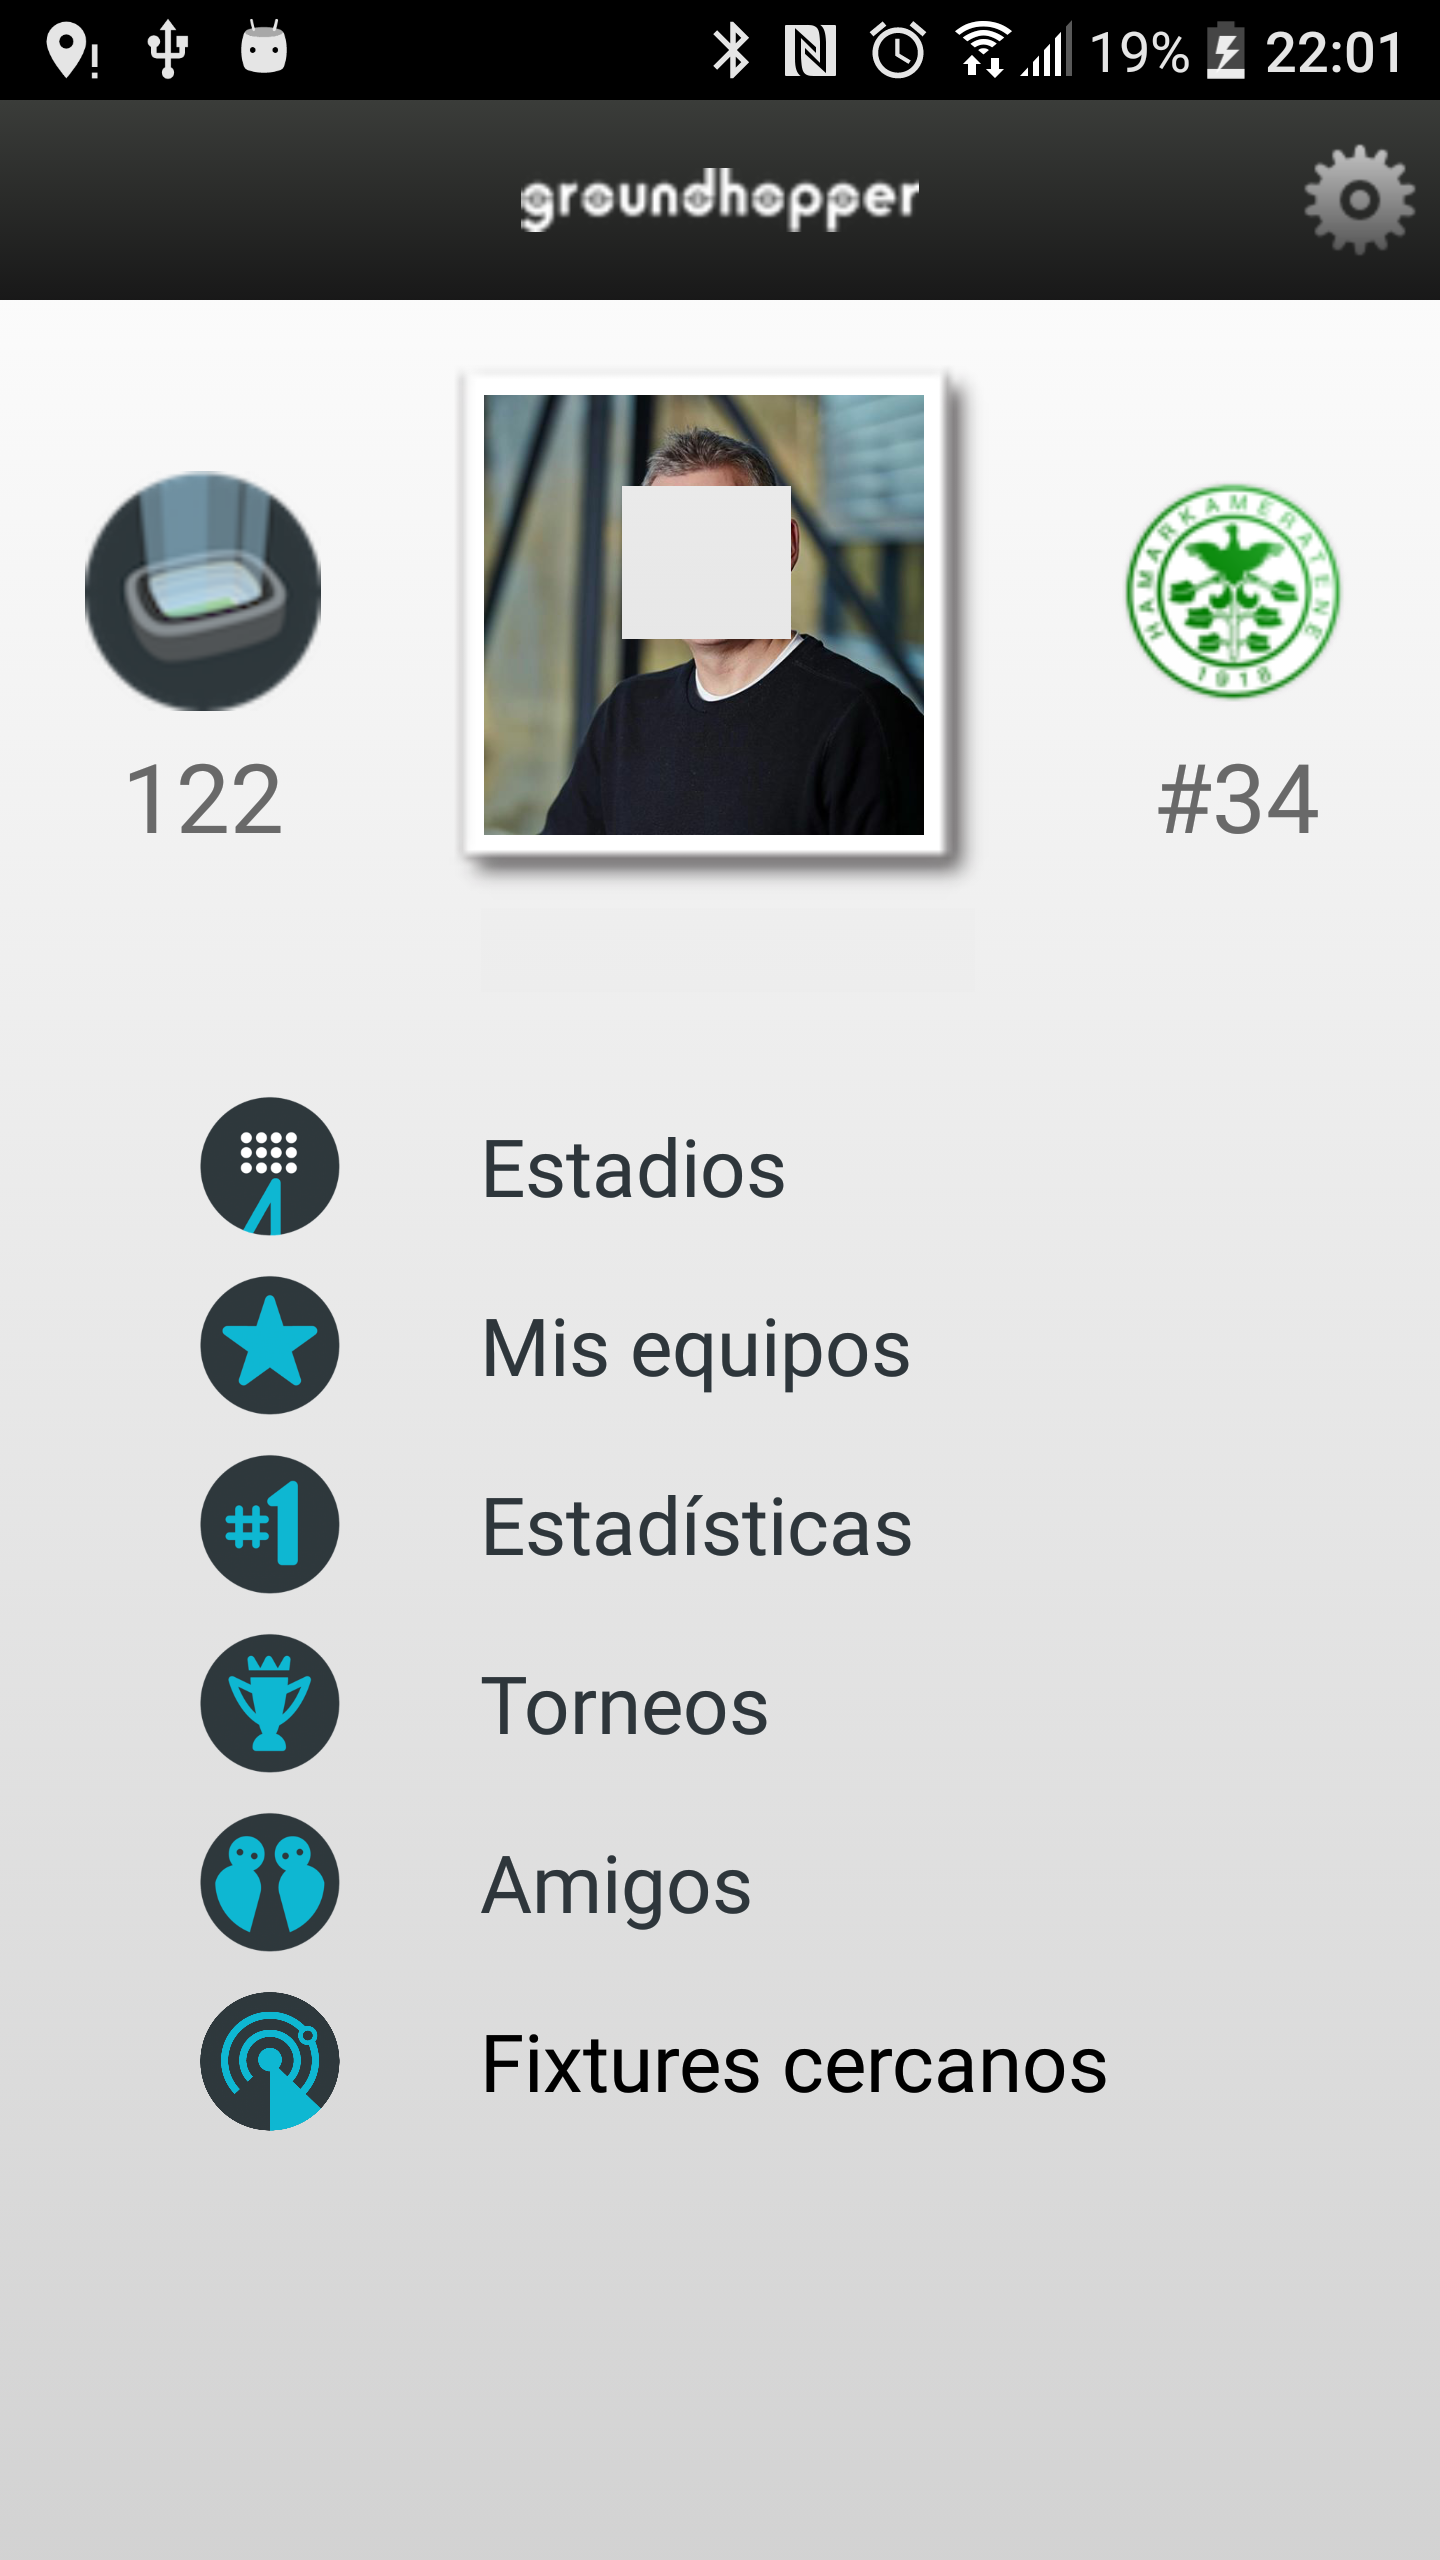 Android application Futbology screenshort